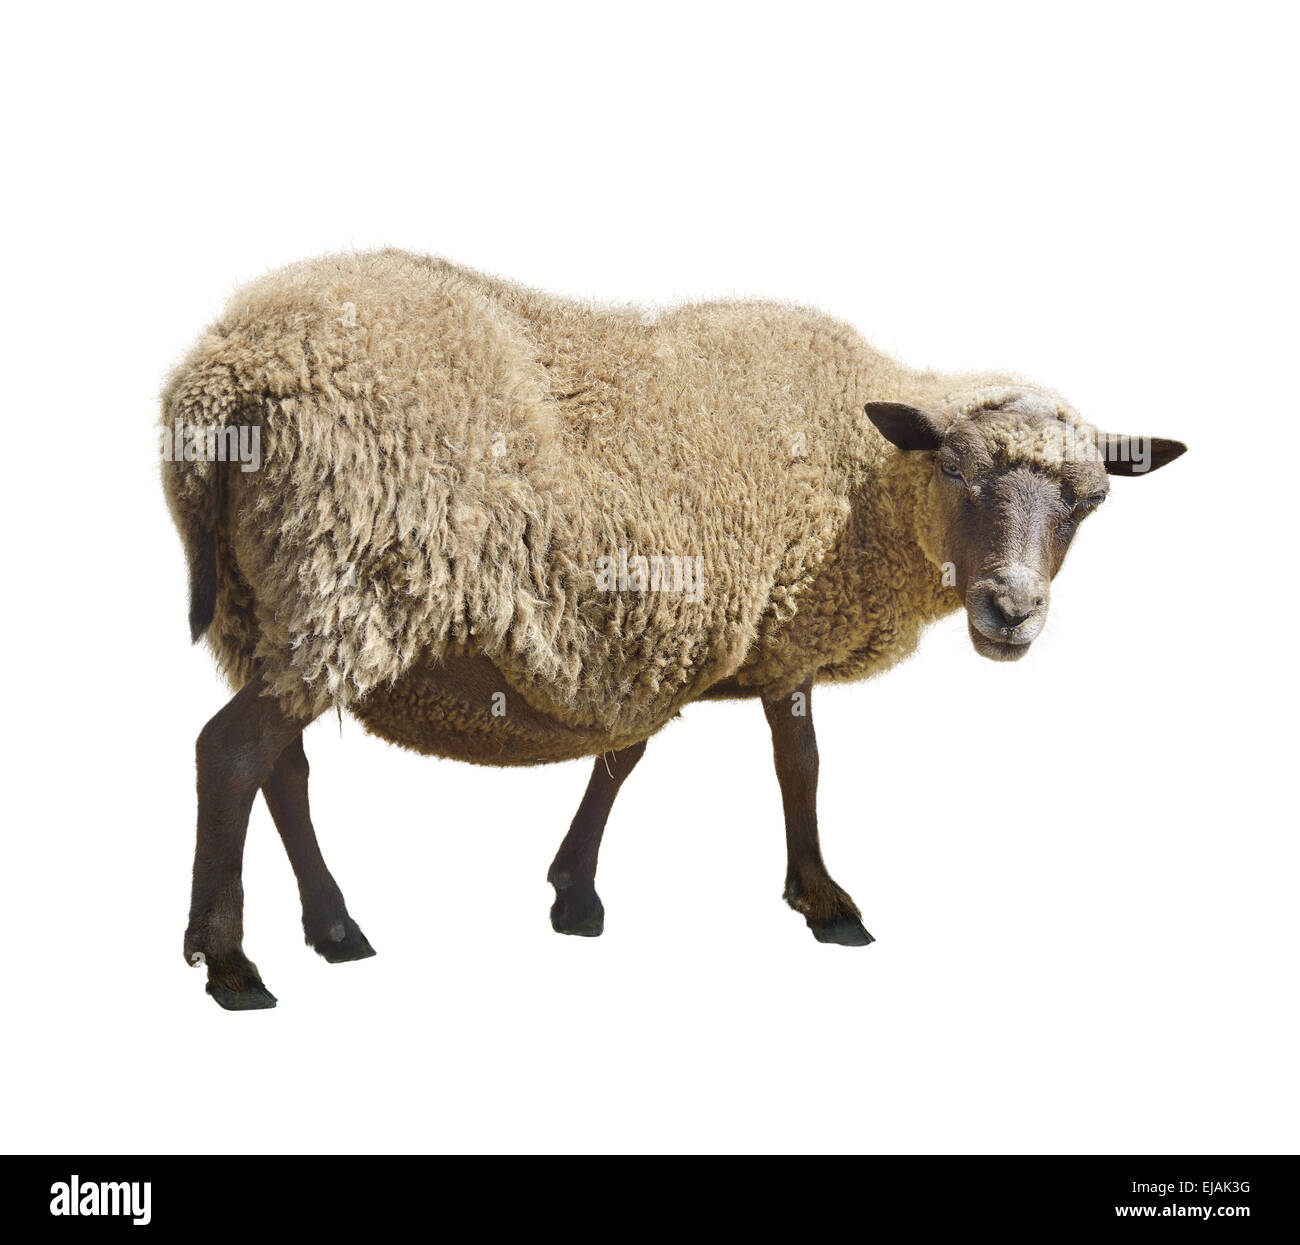 Sheep On White Background Stock Photo